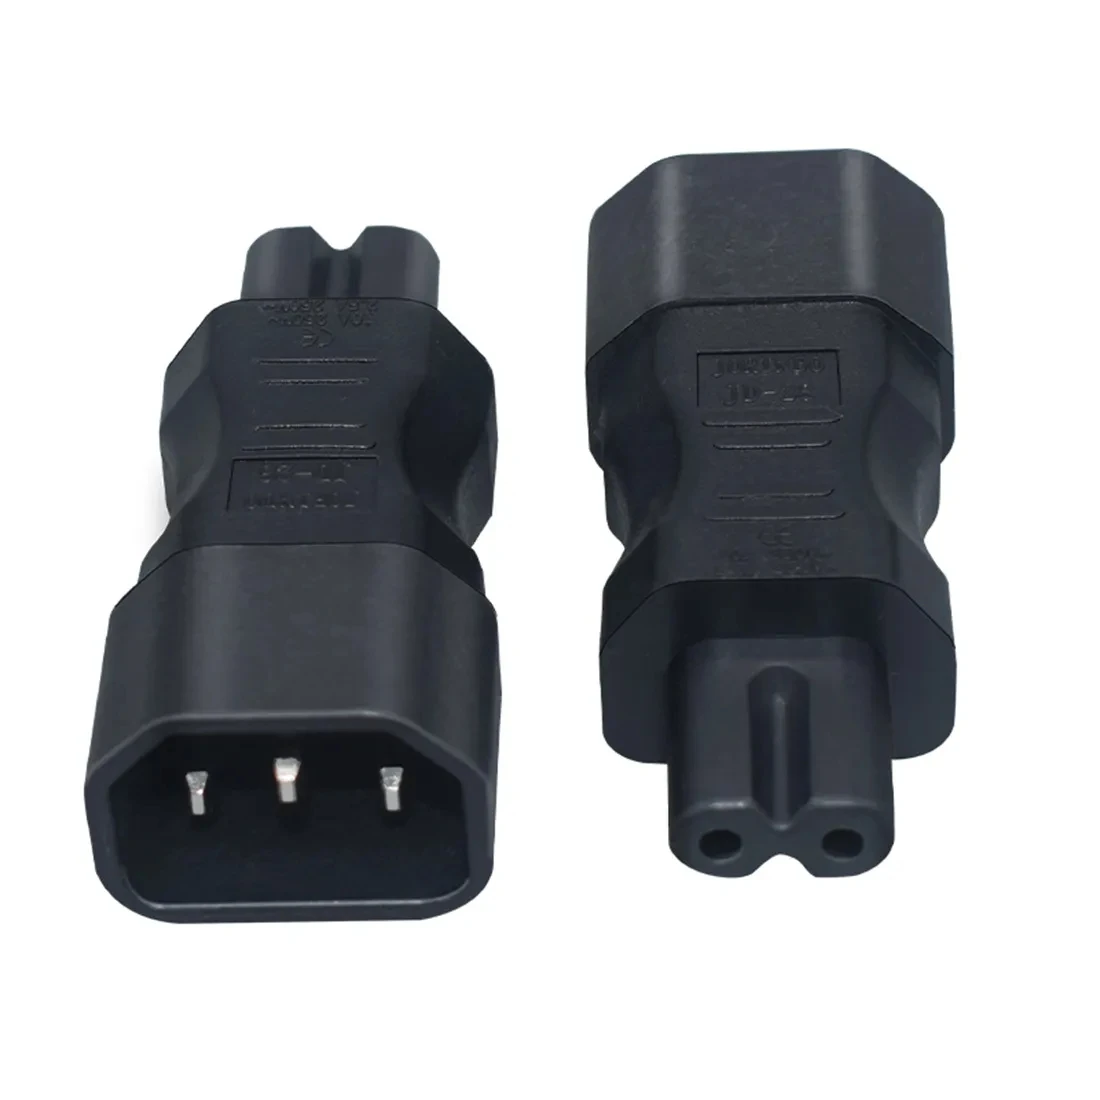 

10pcs C14-C7 Conversion Socket IEC 320 C14 to C7 Extension Conveter PDU UPS Outlet Inline Cable Universal AC Power Adapter Plug